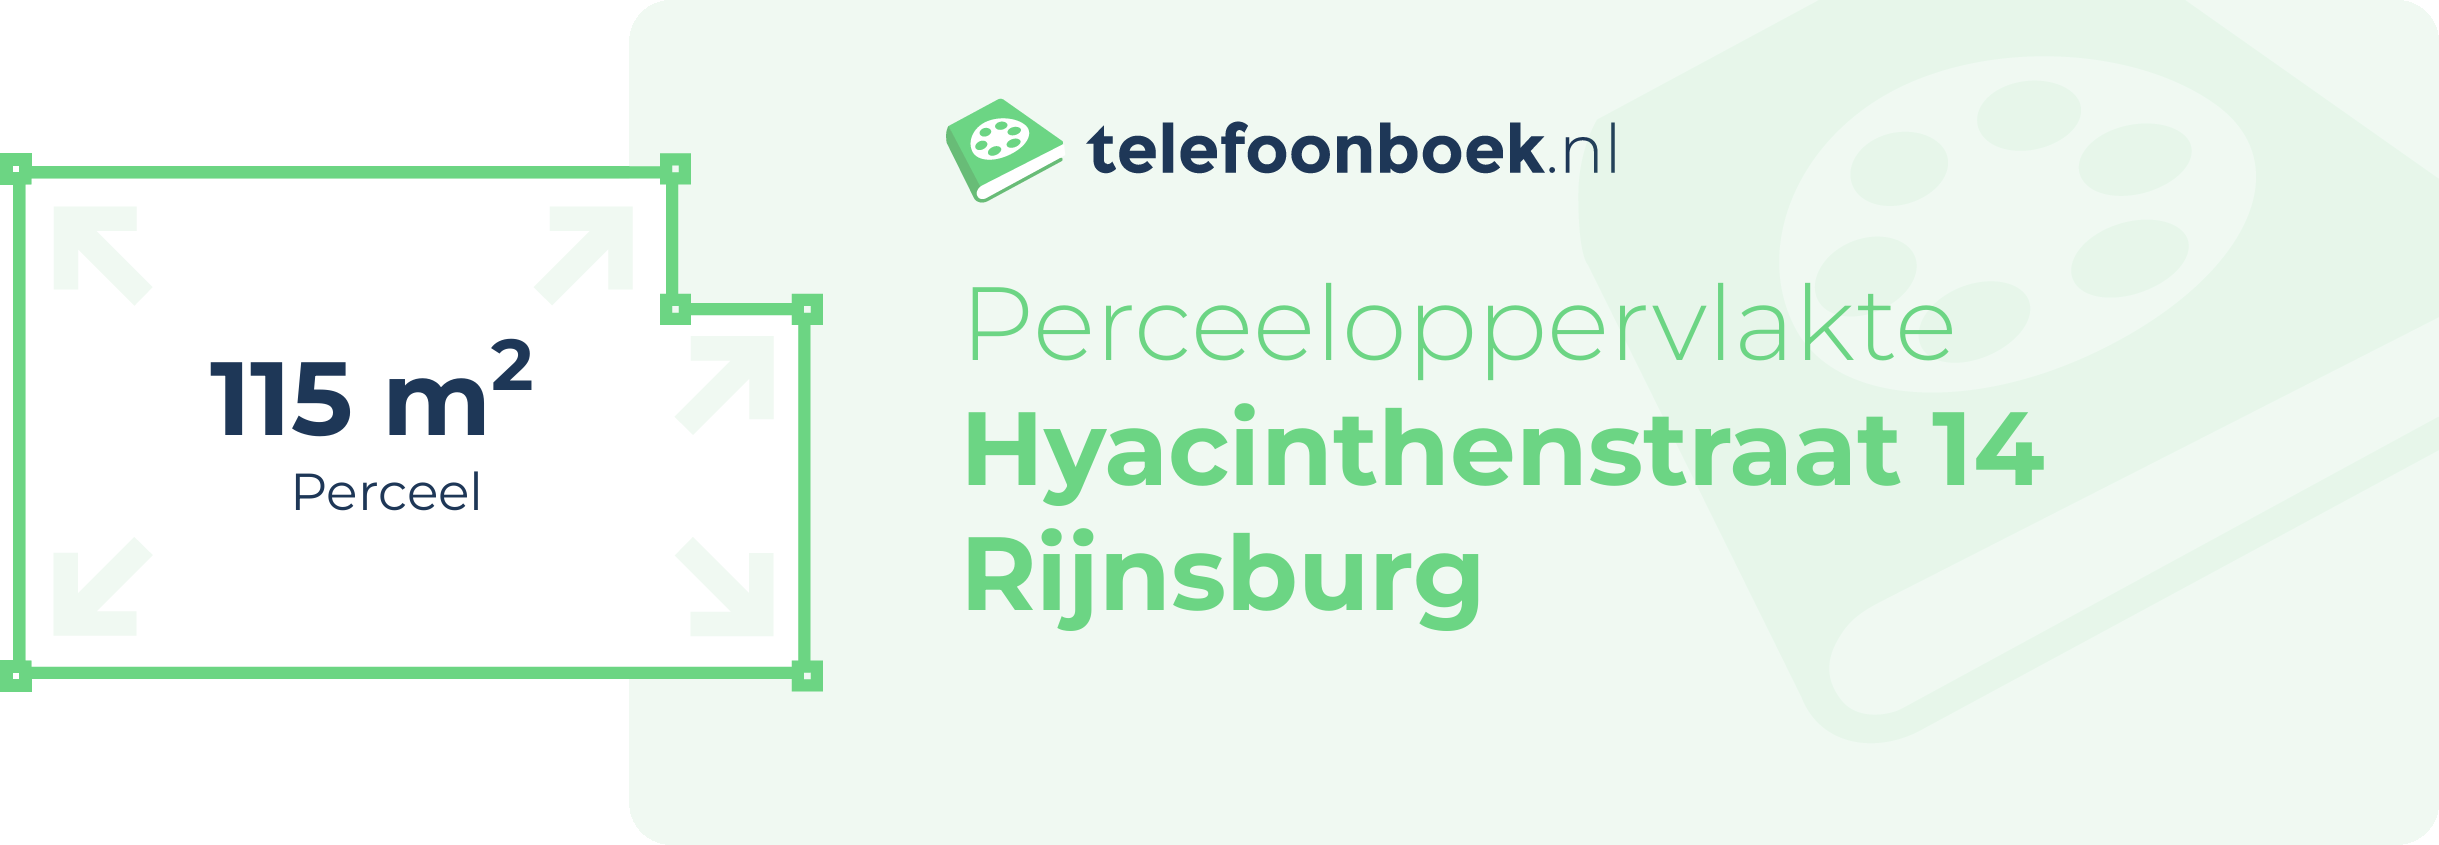 Perceeloppervlakte Hyacinthenstraat 14 Rijnsburg